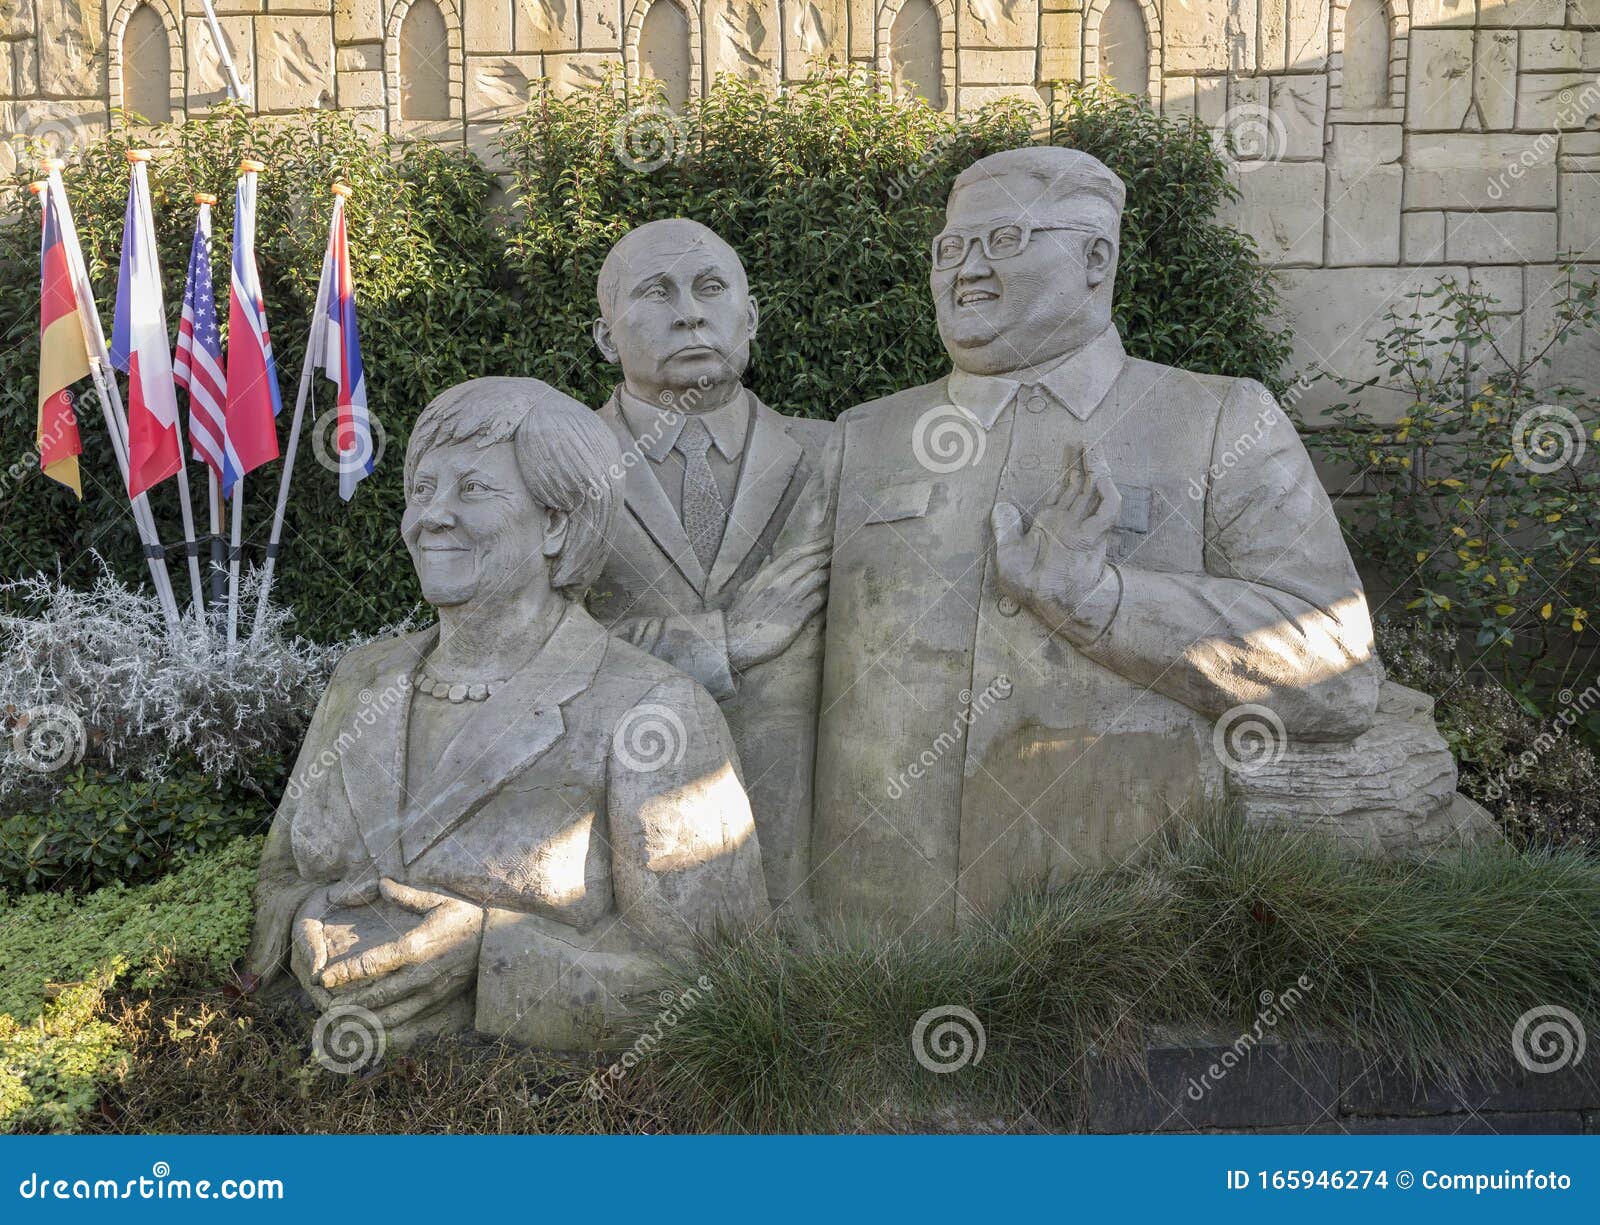 Vladimir Poetin With Angela Merkel And Kim Jong-un In Sand ...